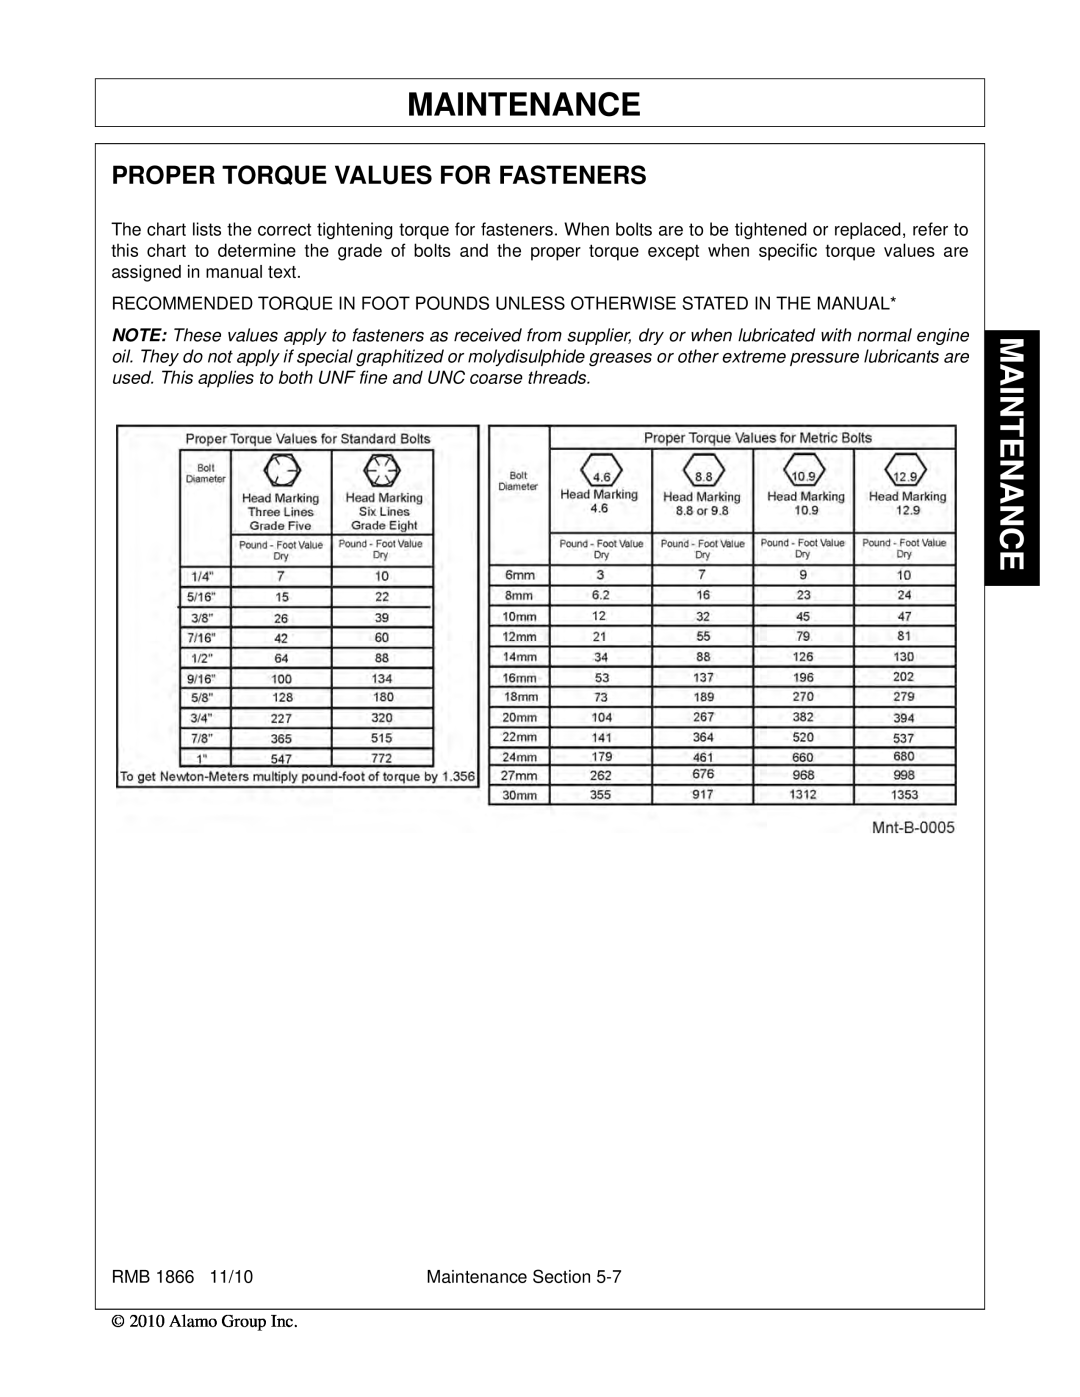 Bush Hog RMB 1865 manual Maintenance, Proper Torque Values For Fasteners 